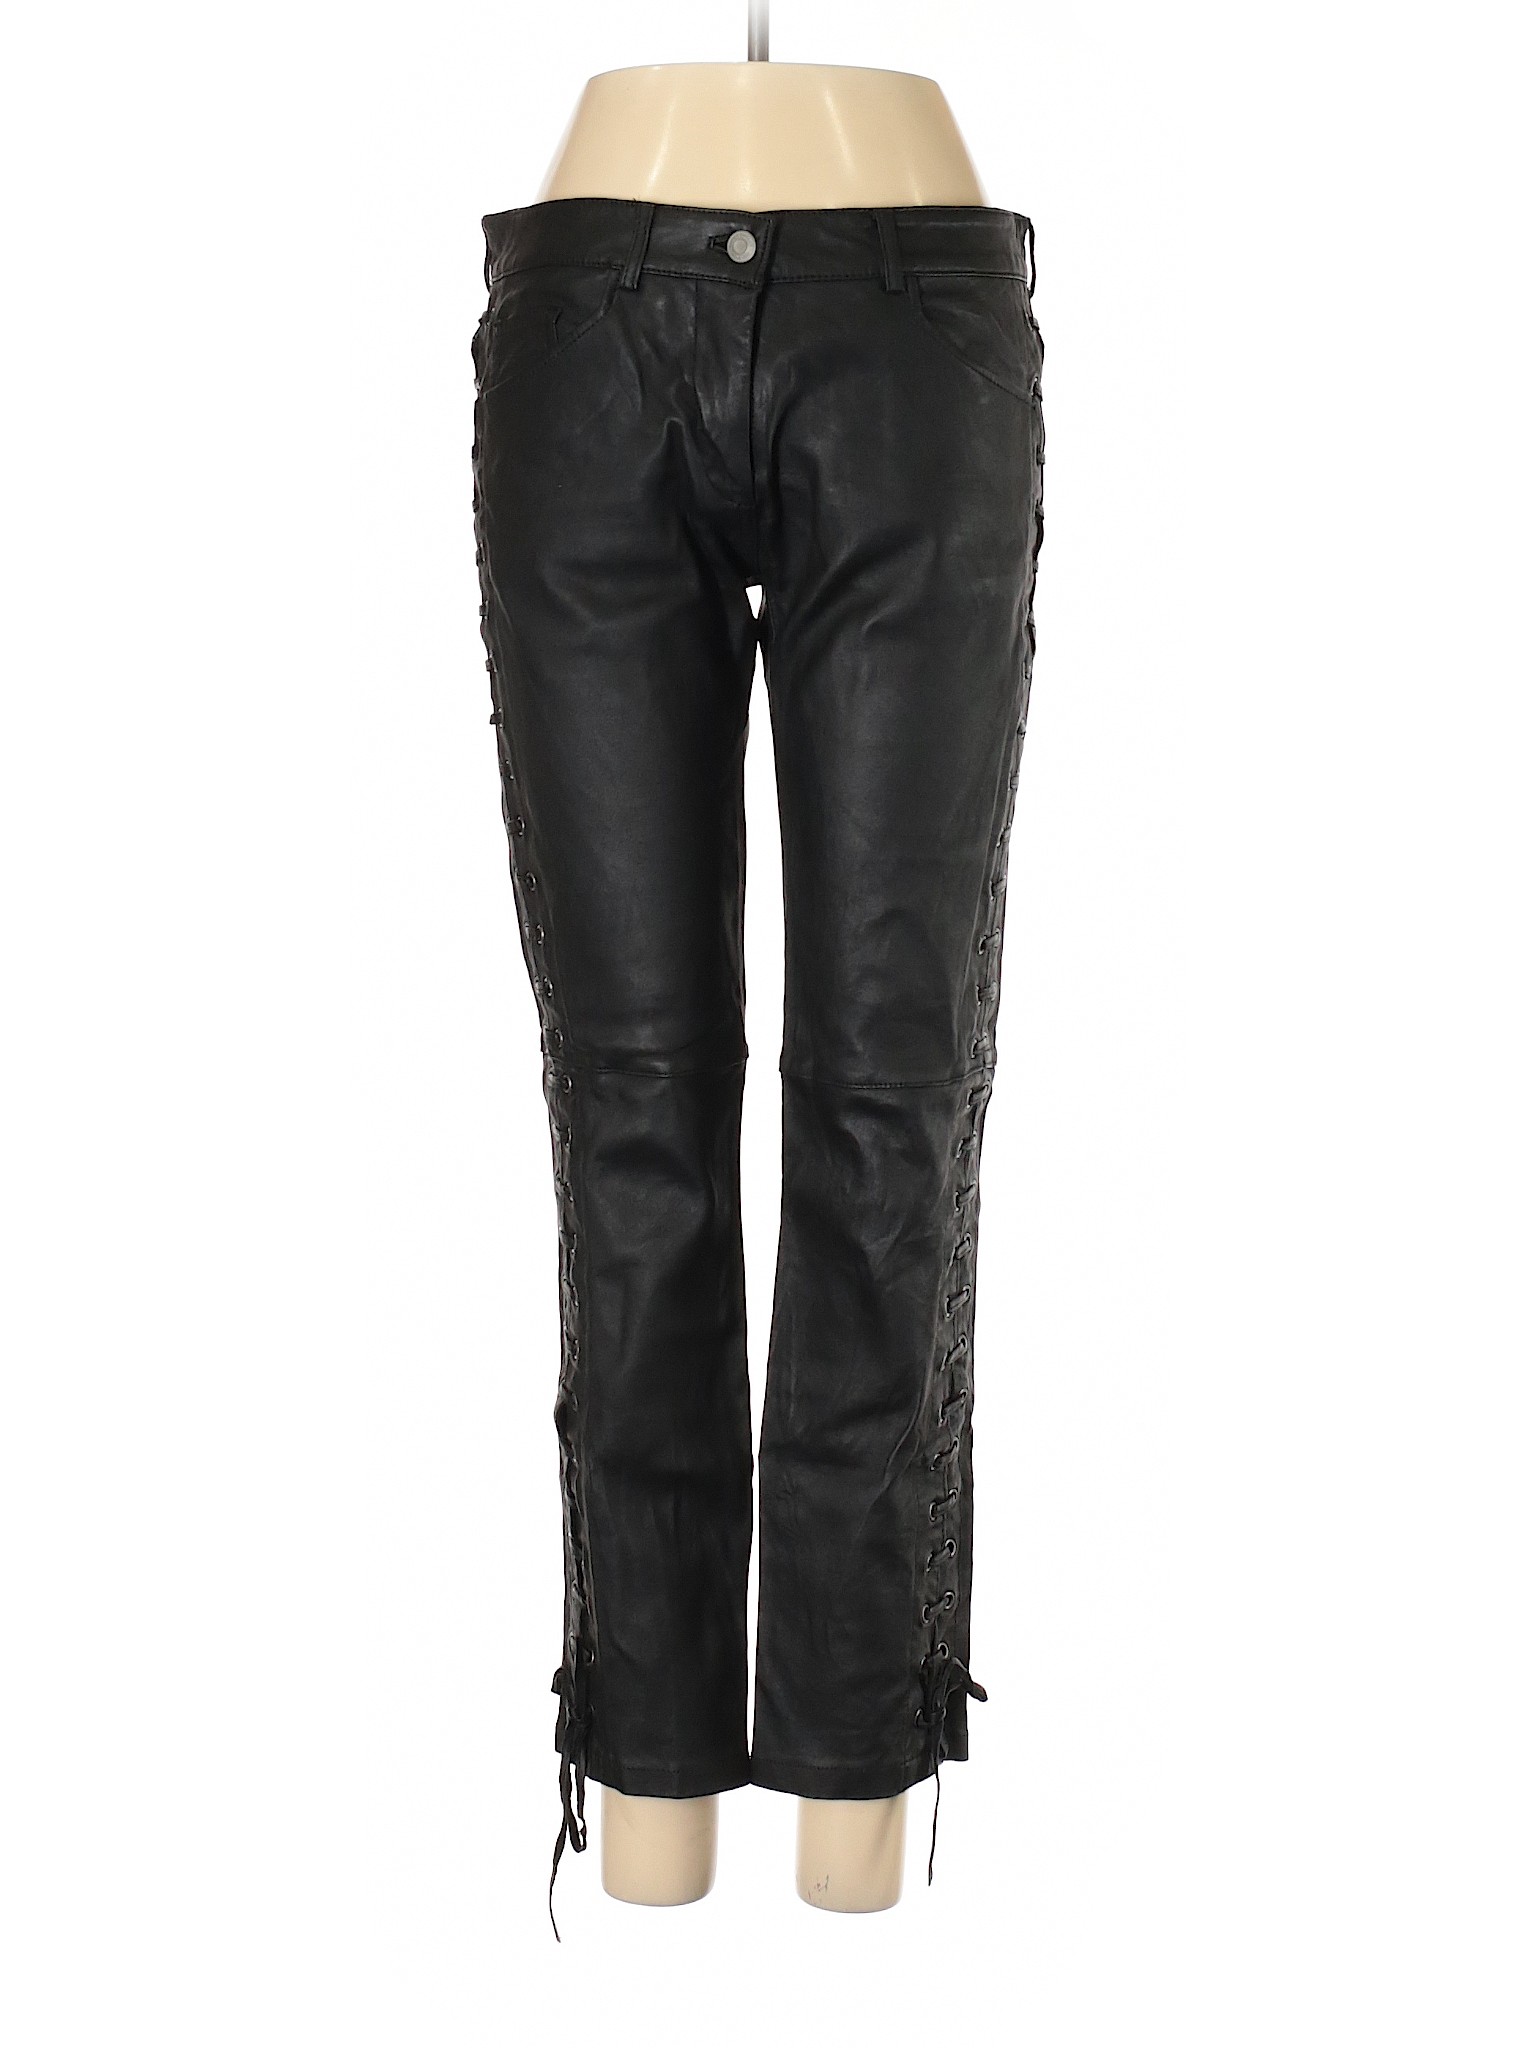 black leather pants womens